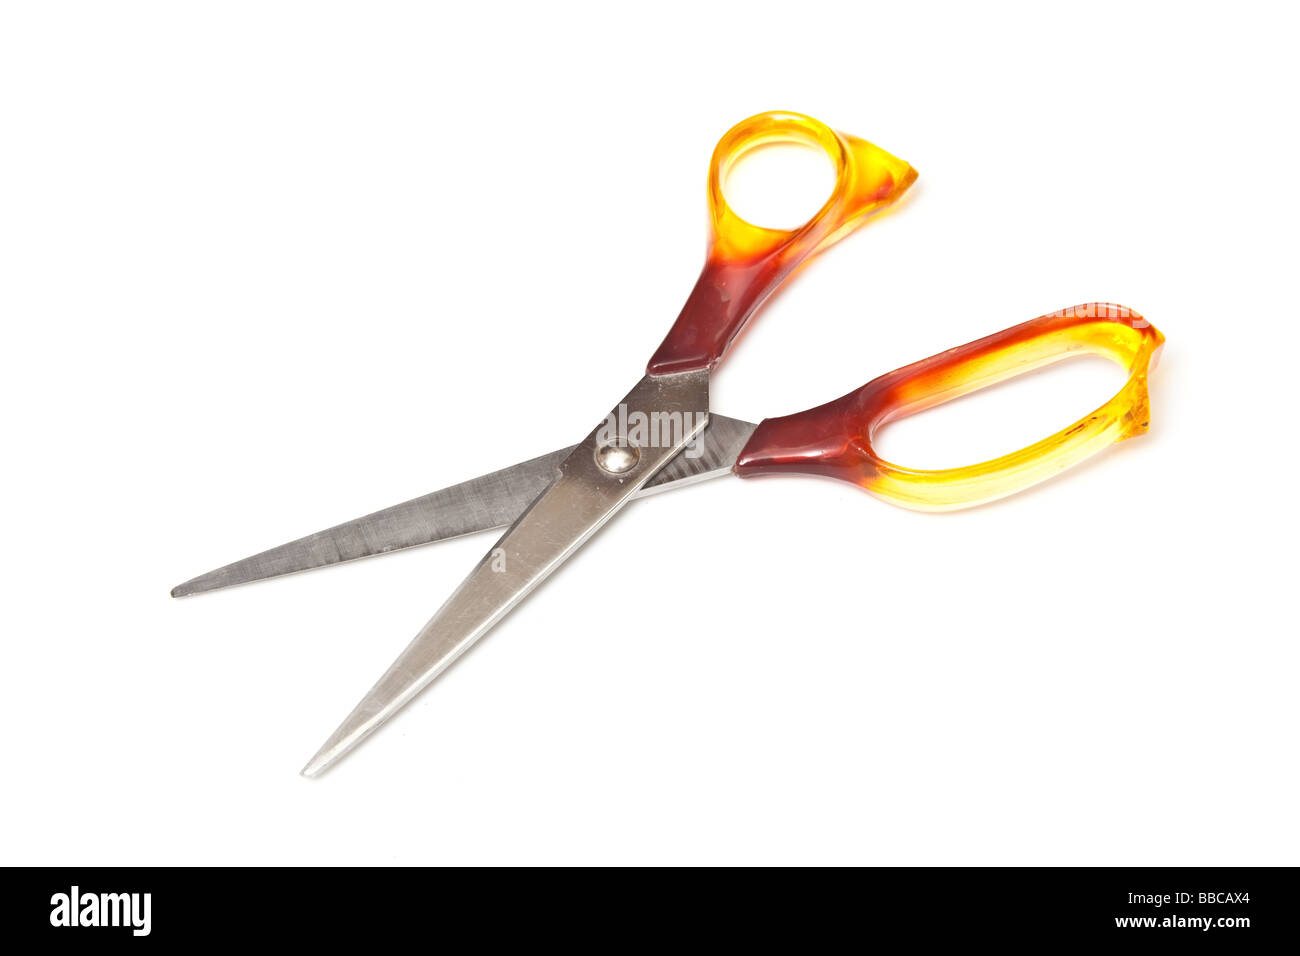 scissors isolated on a white studio background Stock Photo